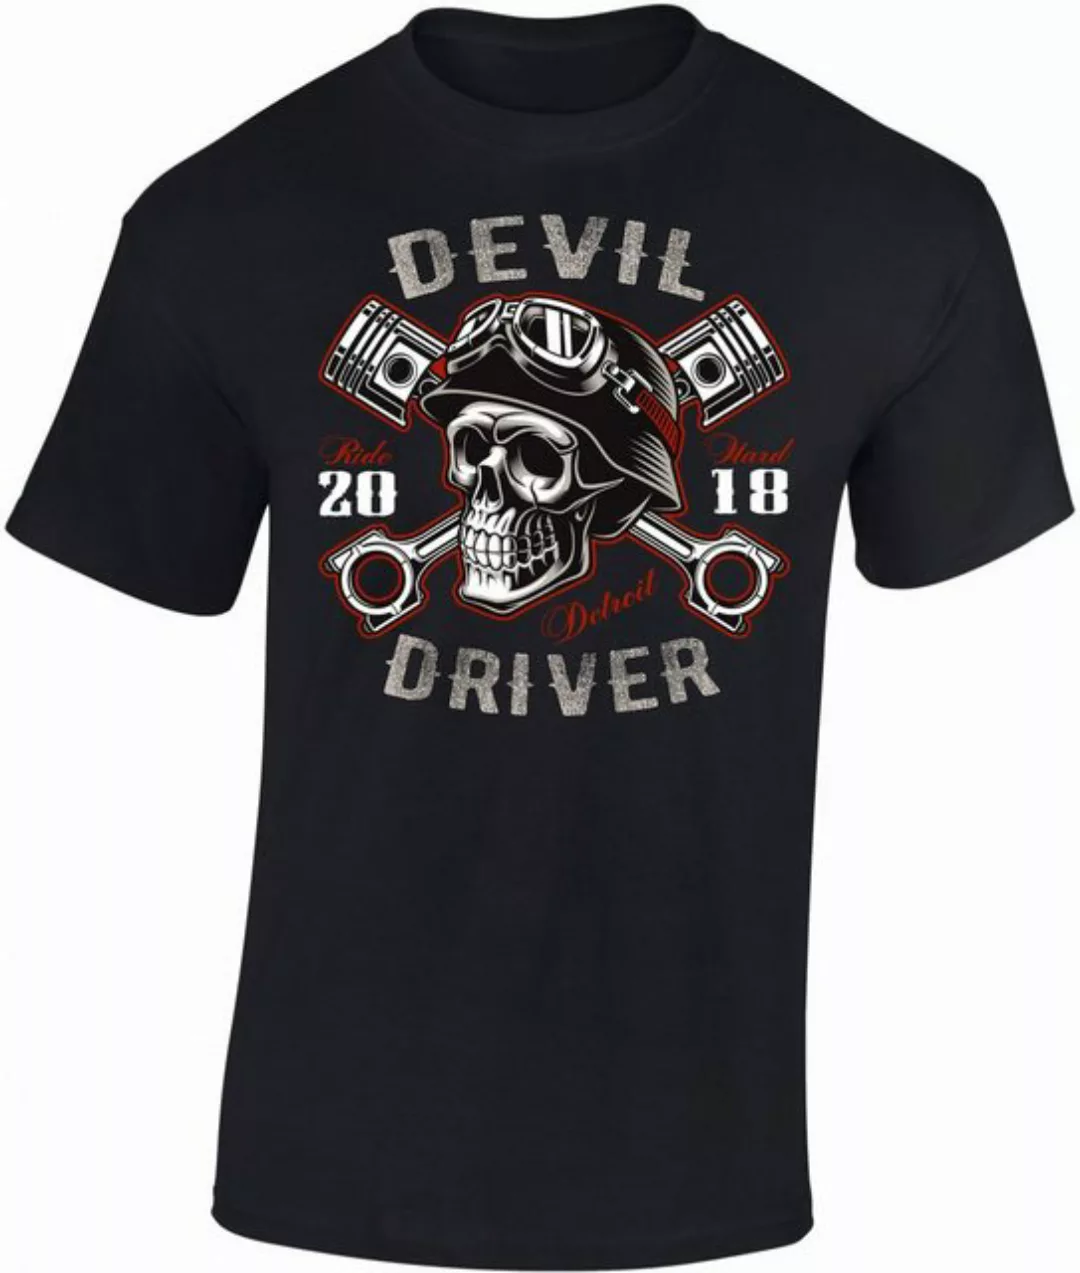 Baddery Print-Shirt Biker Shirt, "Devil Driver", Motorrad T-Shirt, hochwert günstig online kaufen